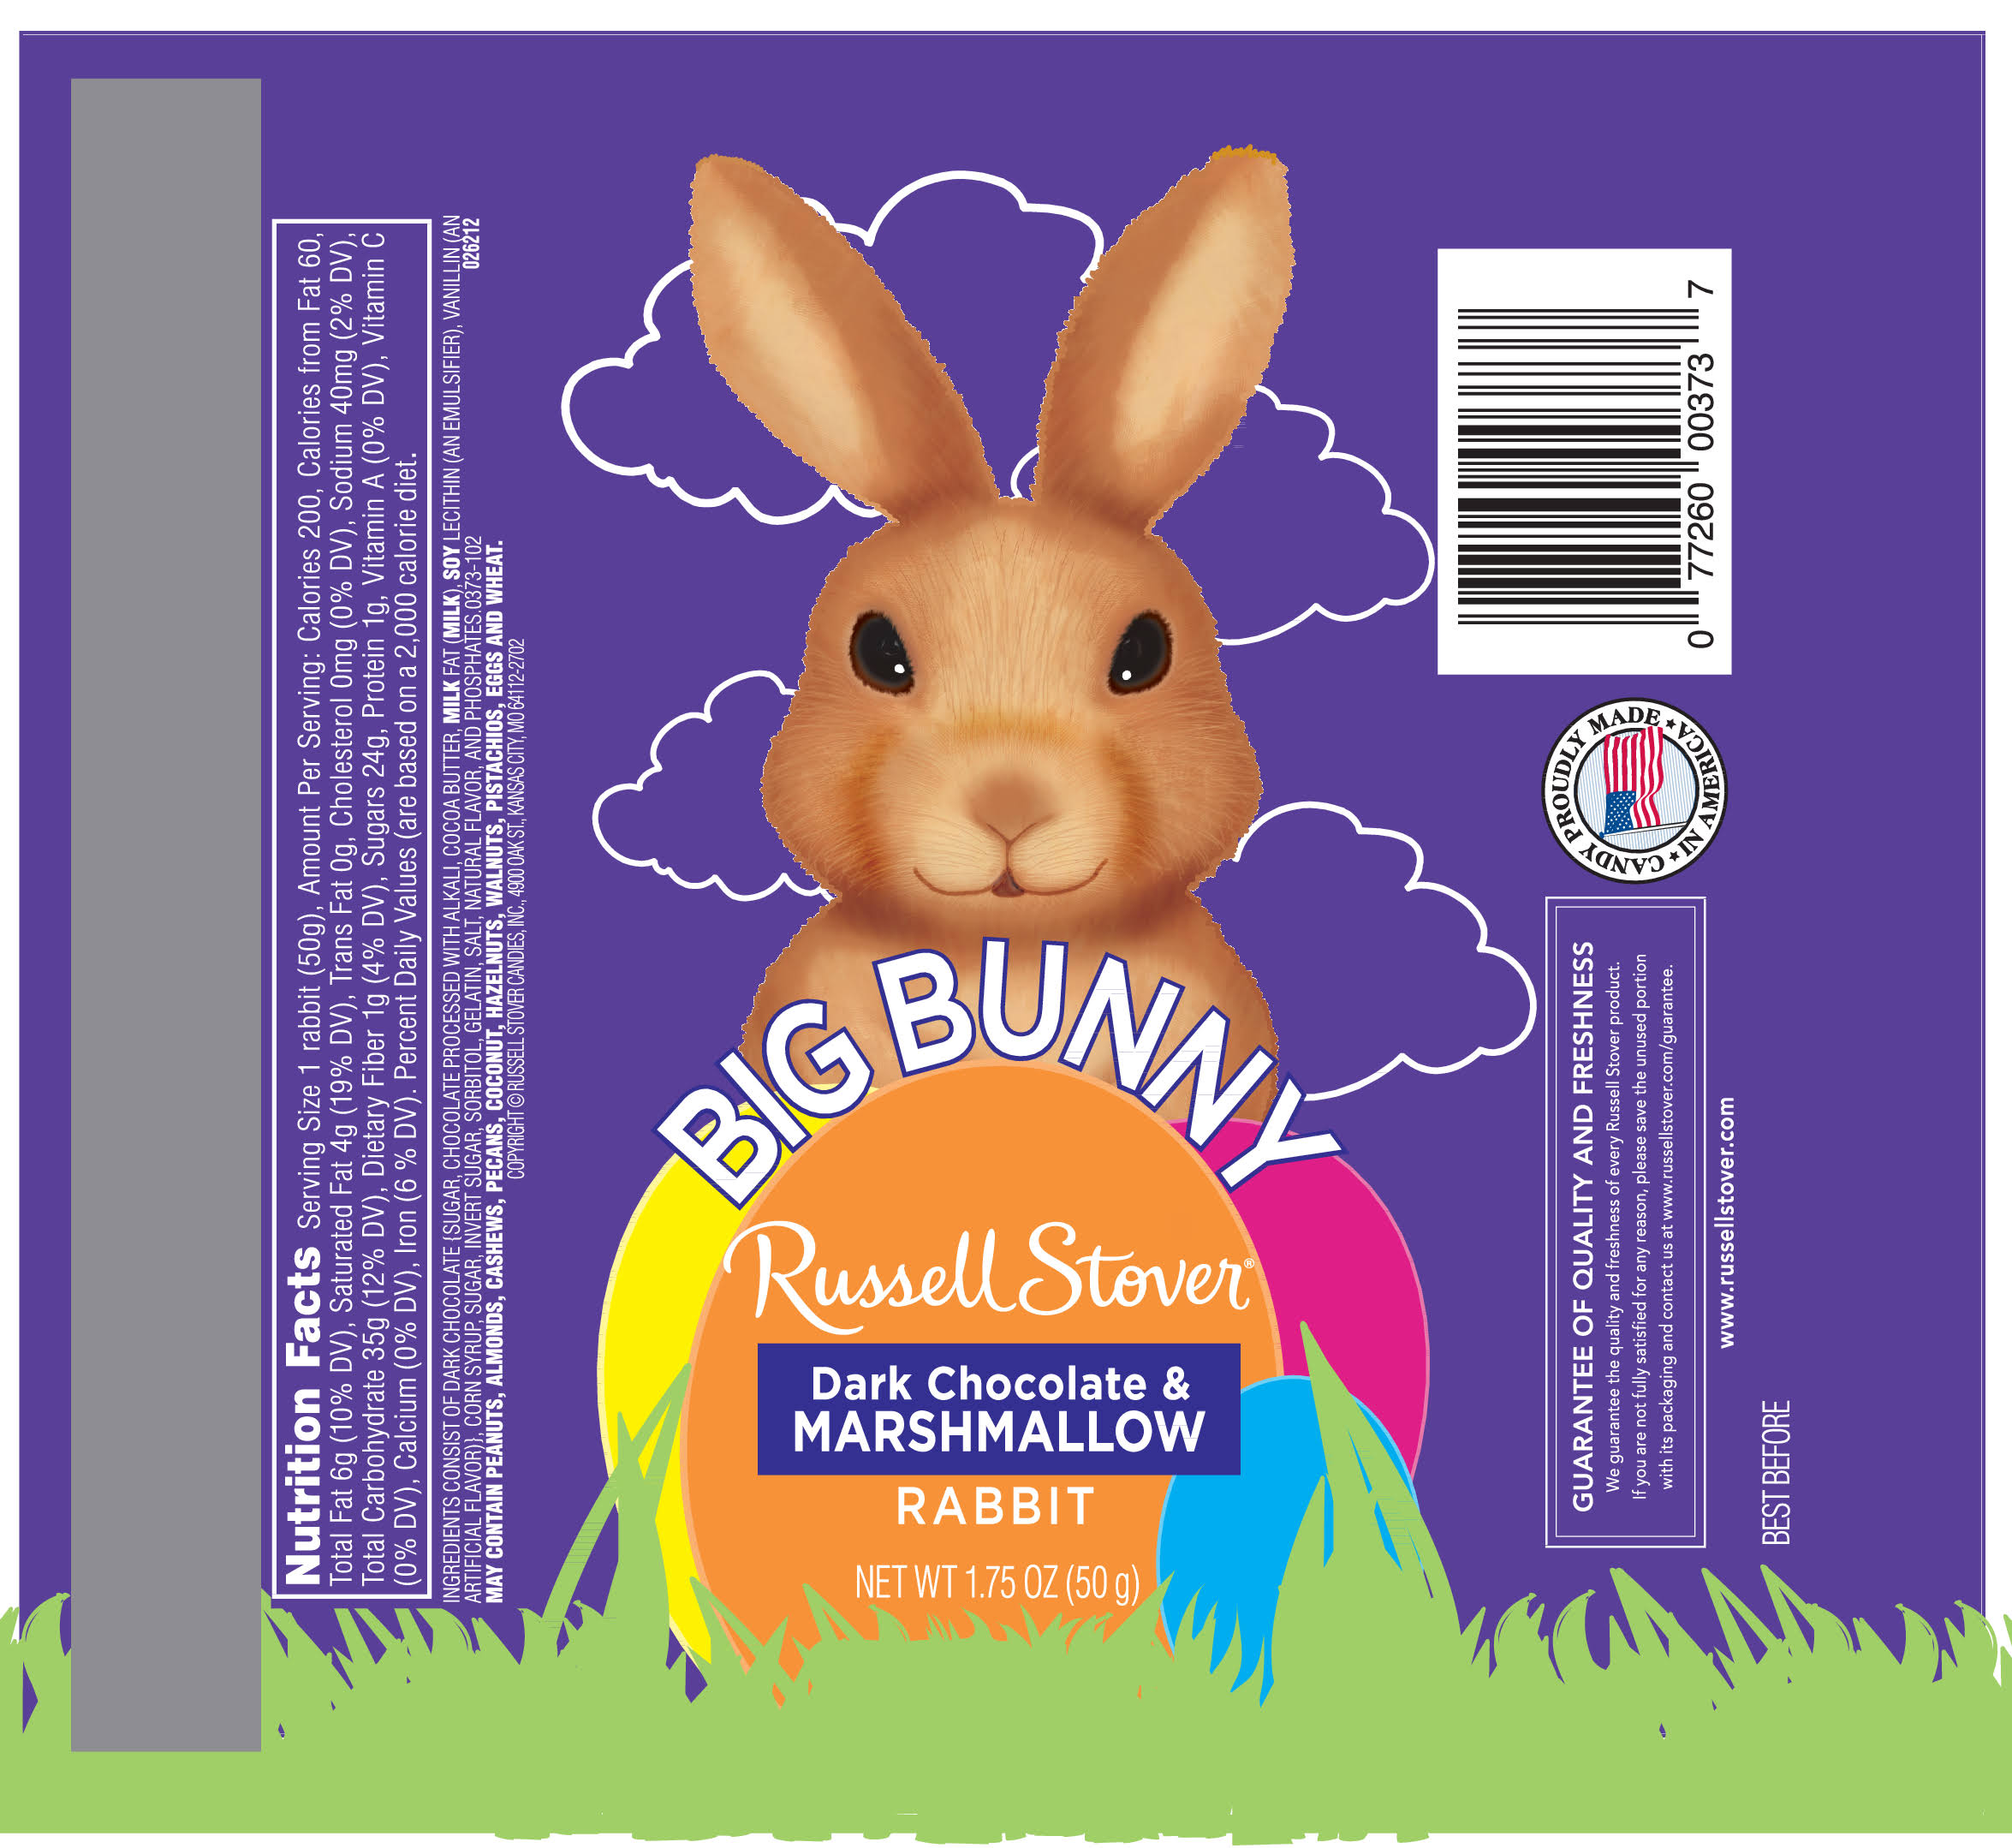 Russell Stover Dark Chocolate Marshmallow - Big Bunny 1.75oz